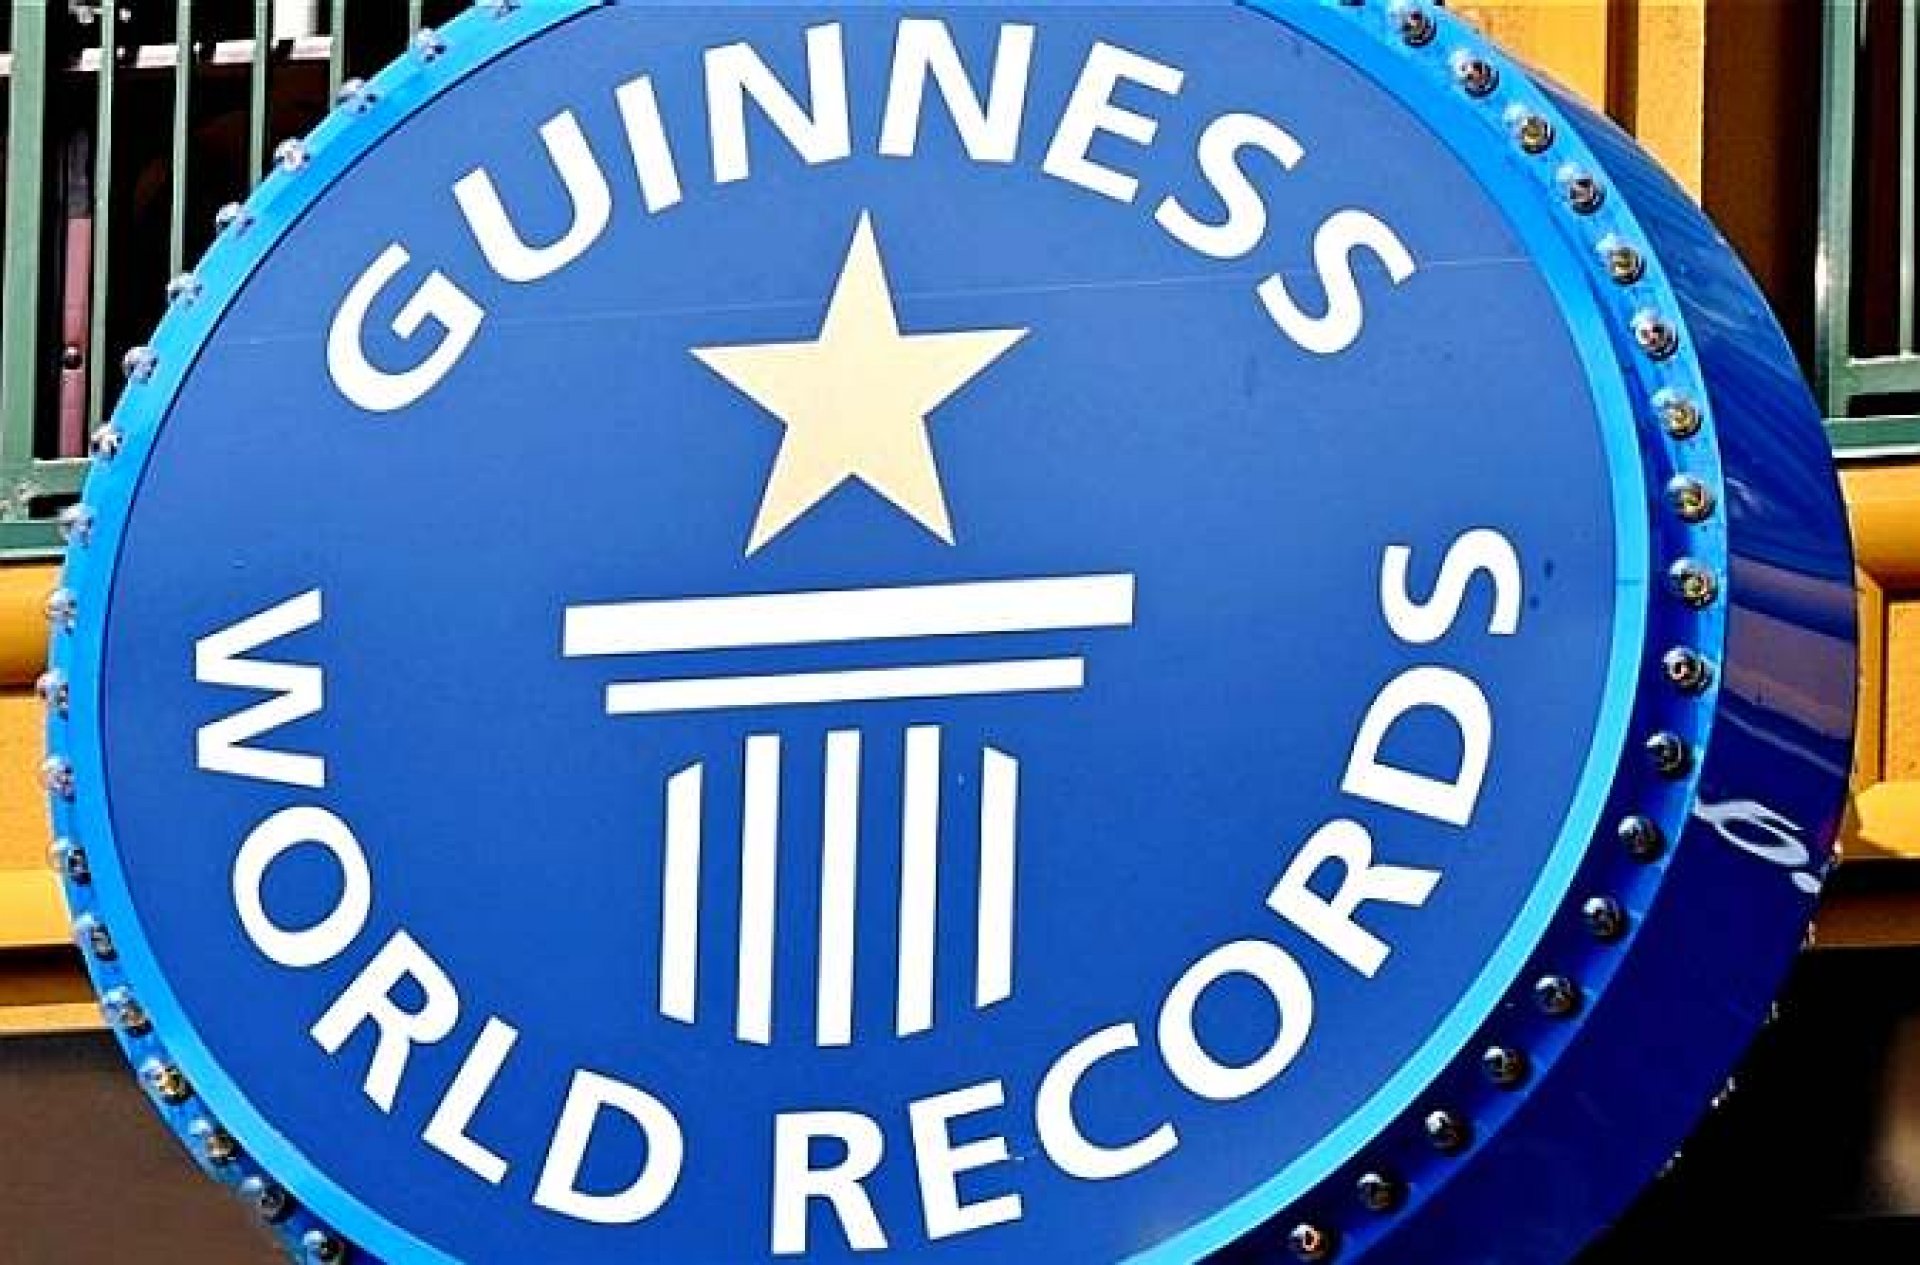 guinness sign lights blue white world record trade mark dust up 78357800